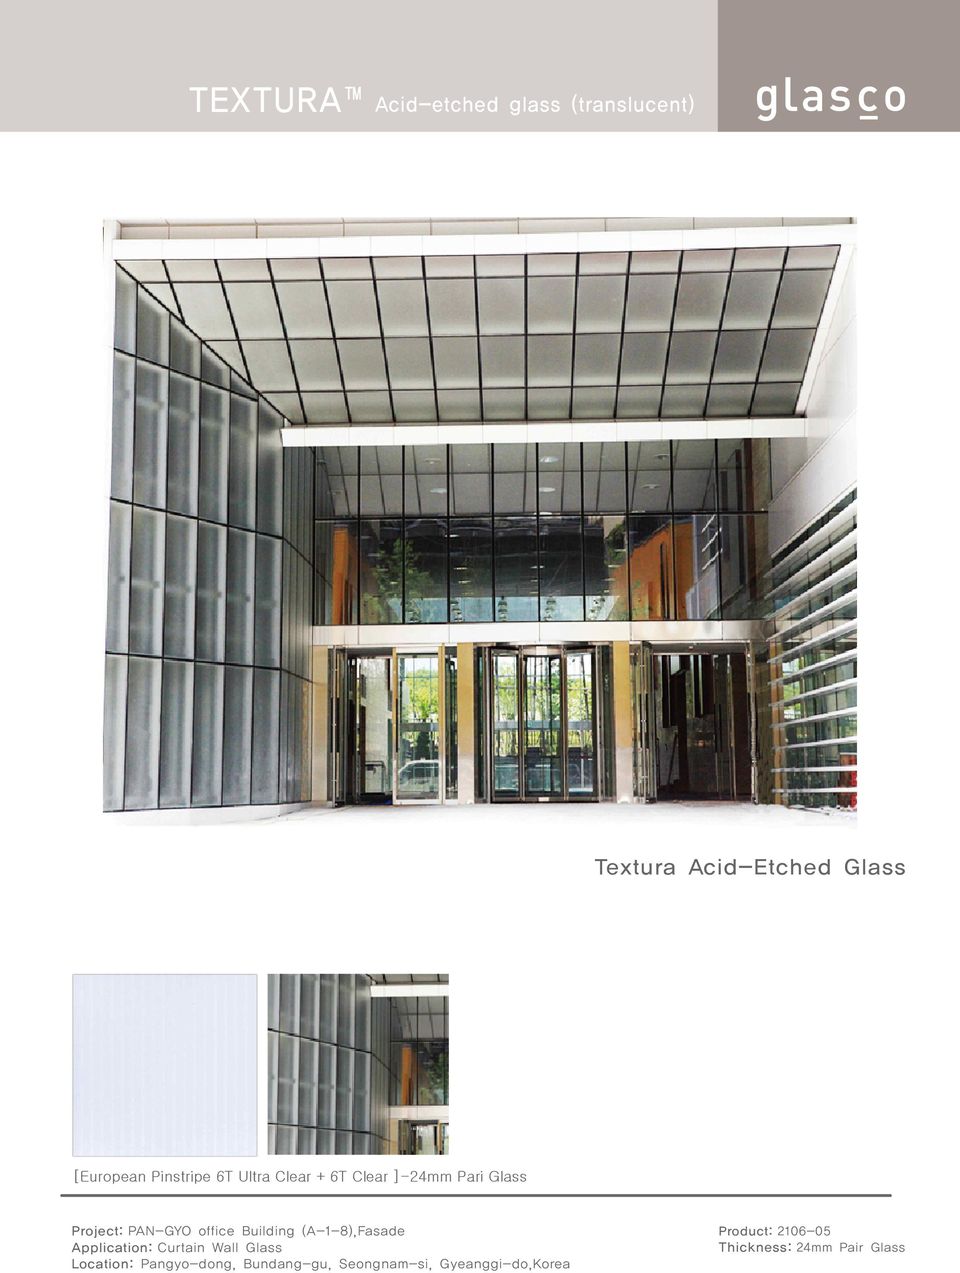 Curtain Wall Glass Location: Pangyo-dong, Bundang-gu,